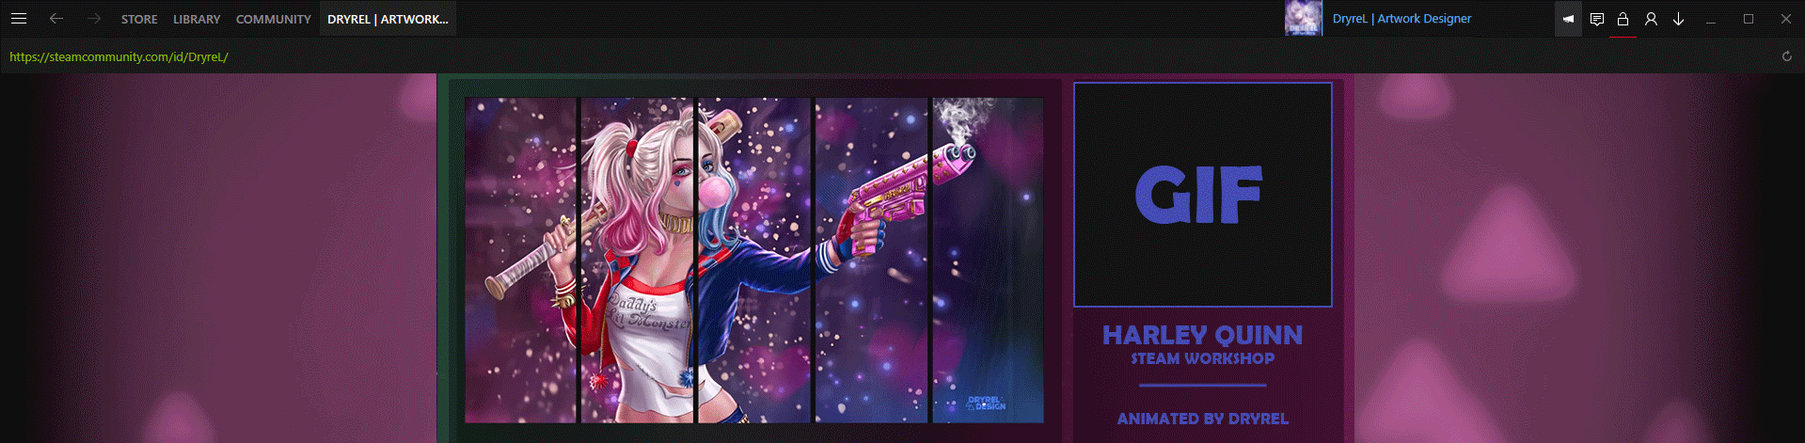 Harley Quinn | Animated Steam Workshop